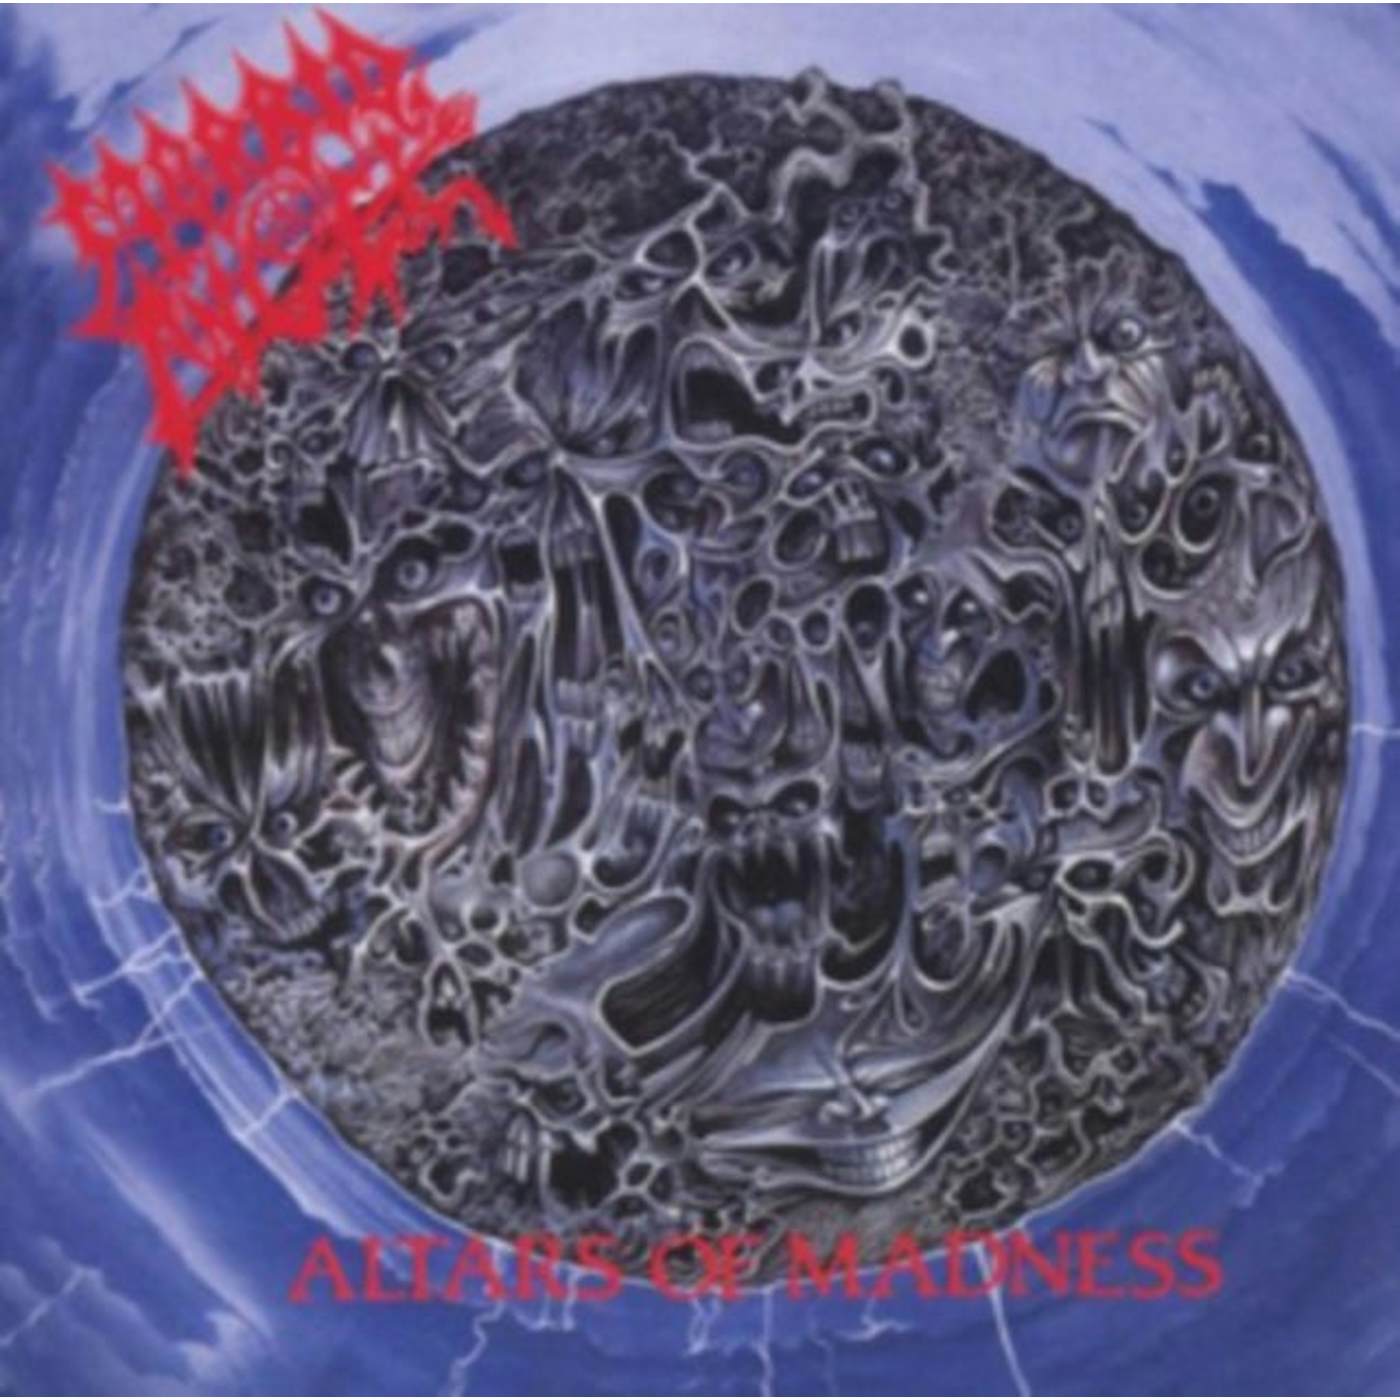 Morbid Angel LP Vinyl Record - Altars Of Madness